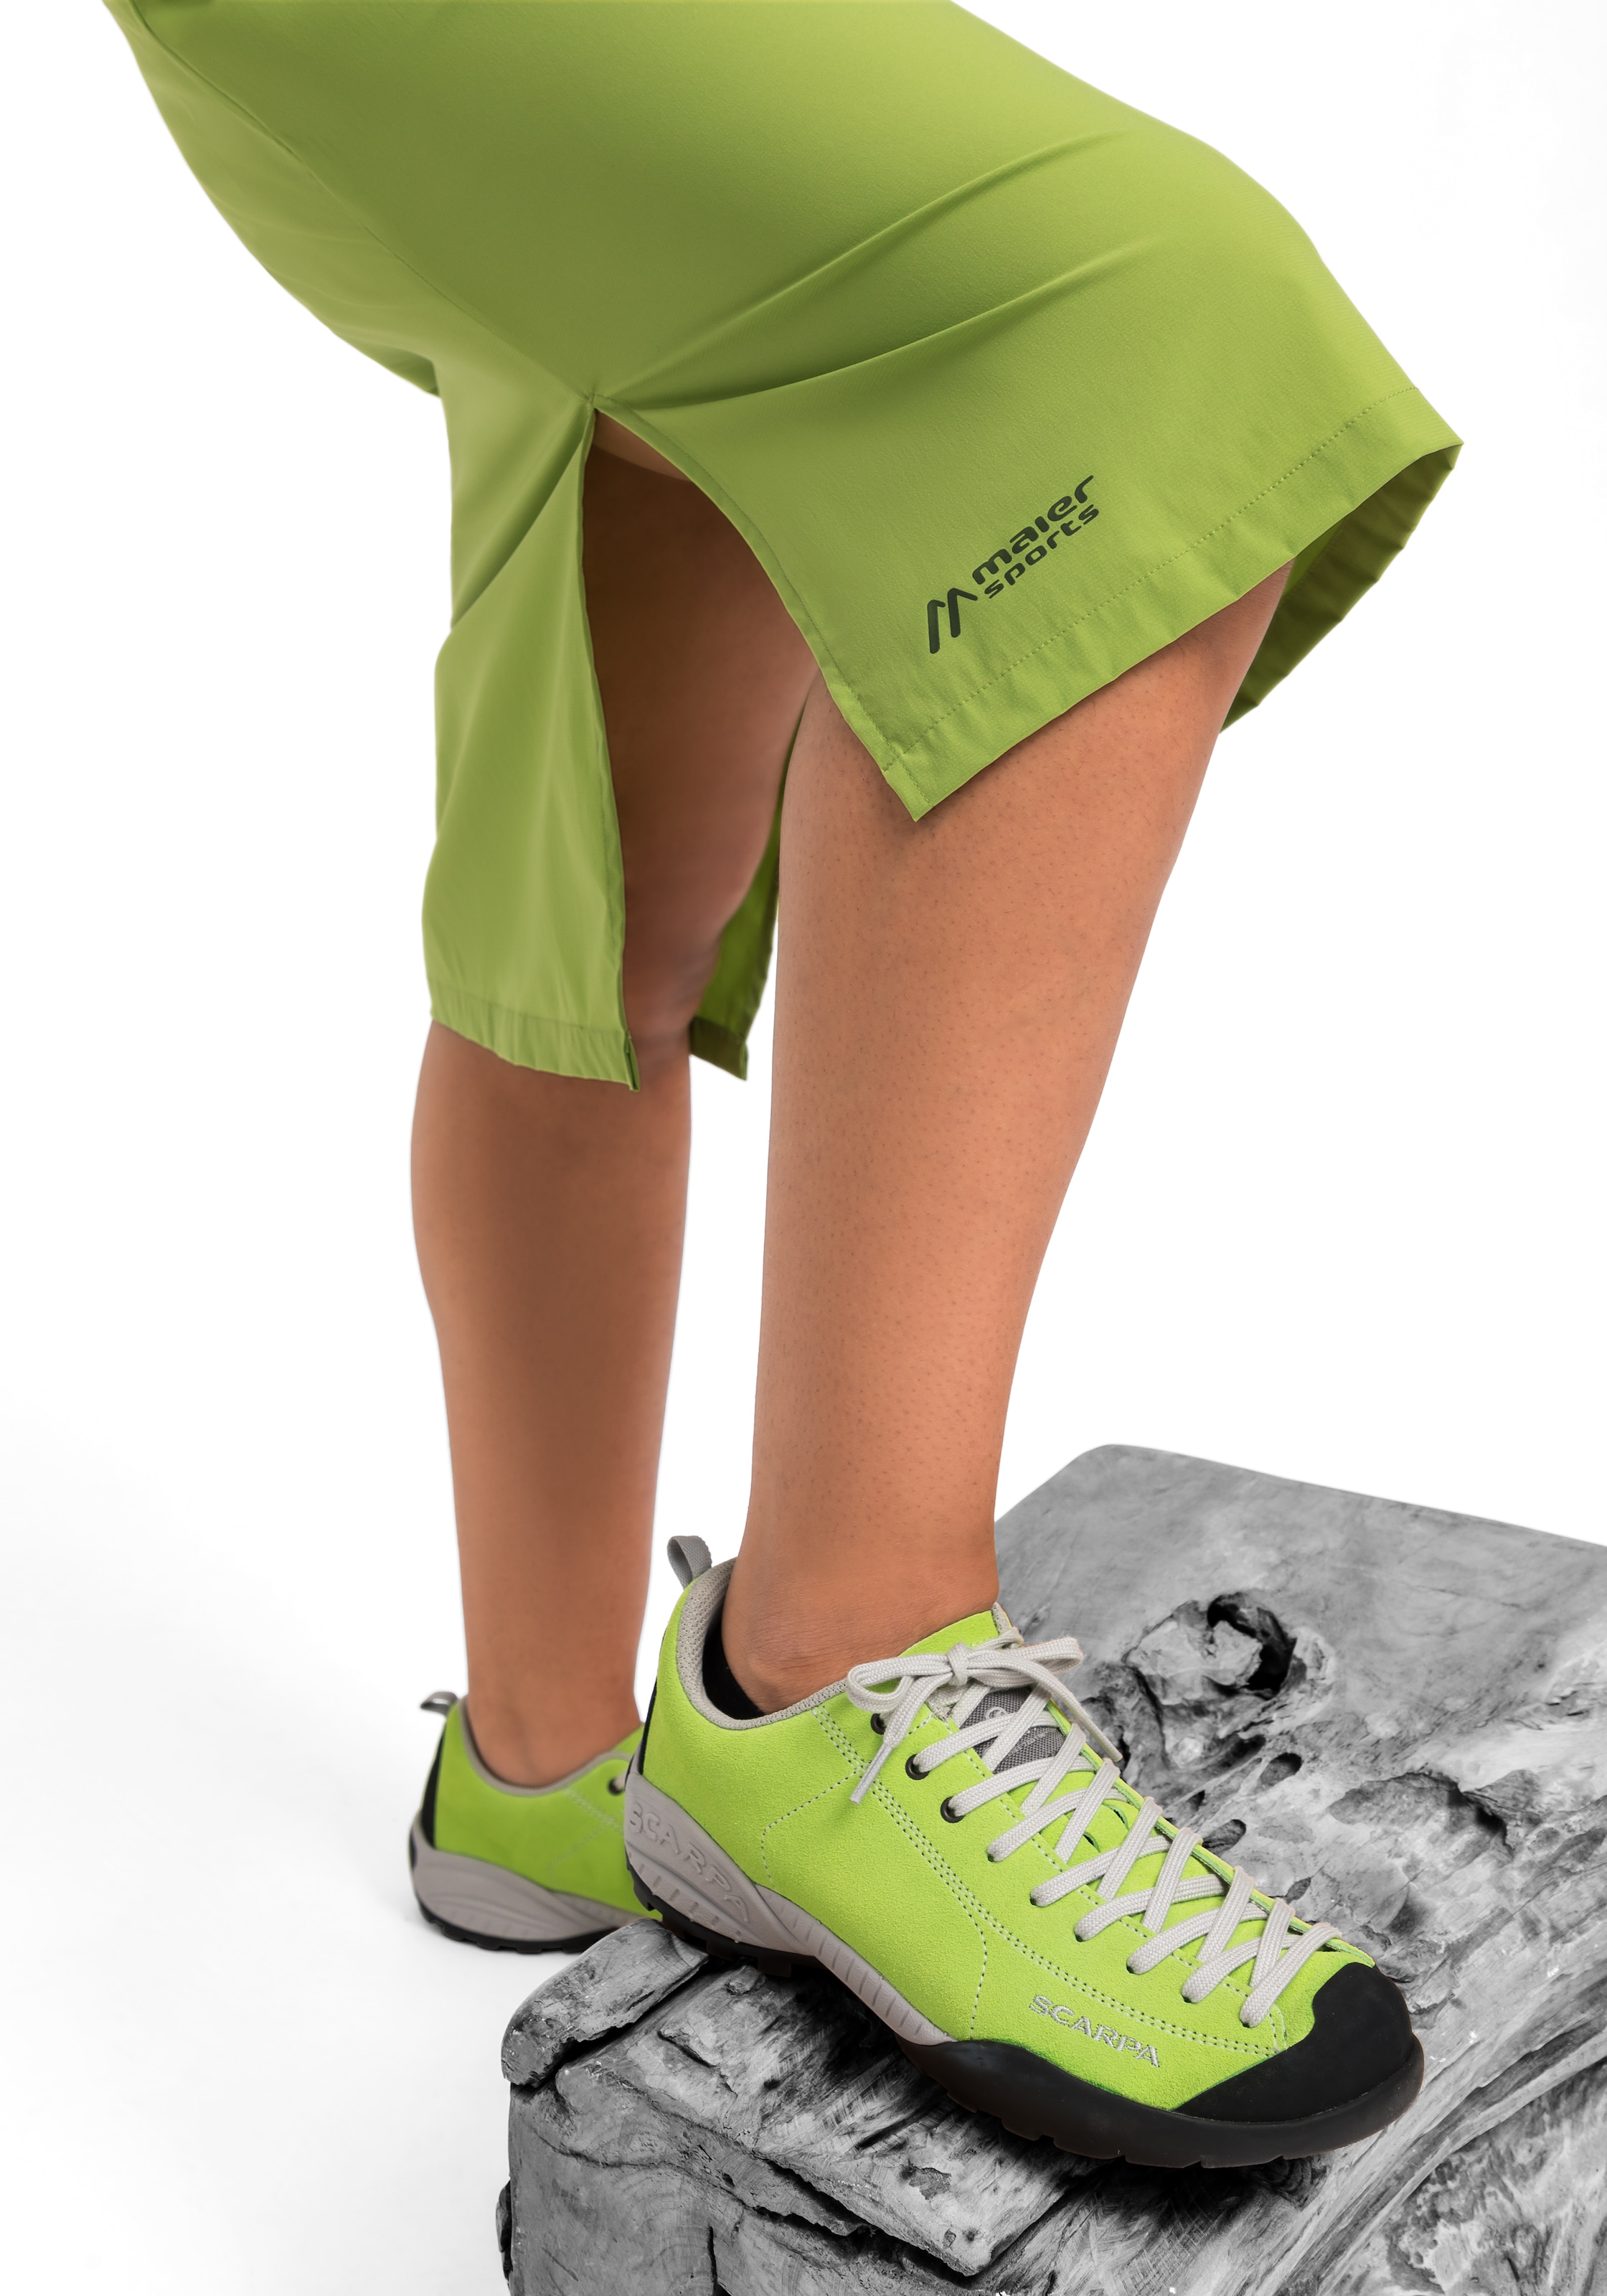 Maier Sports Sommerrock »Fortunit Skirt« kaufen